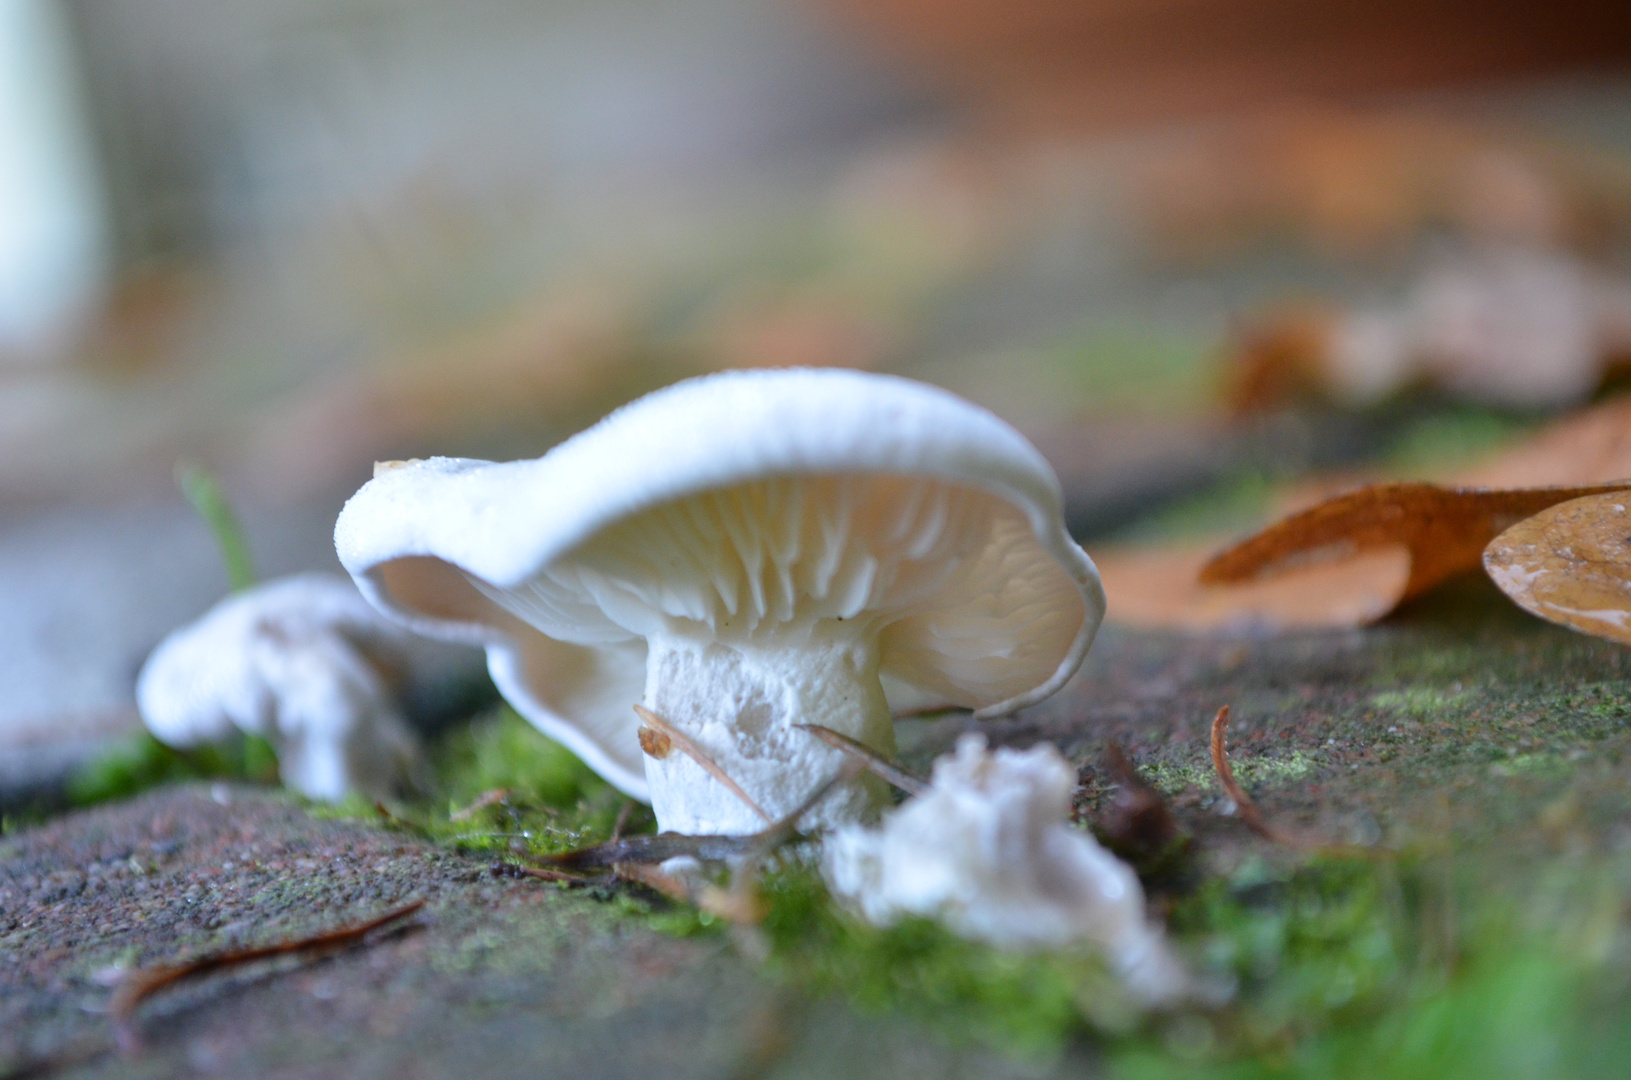 The white mushroom on the terrace